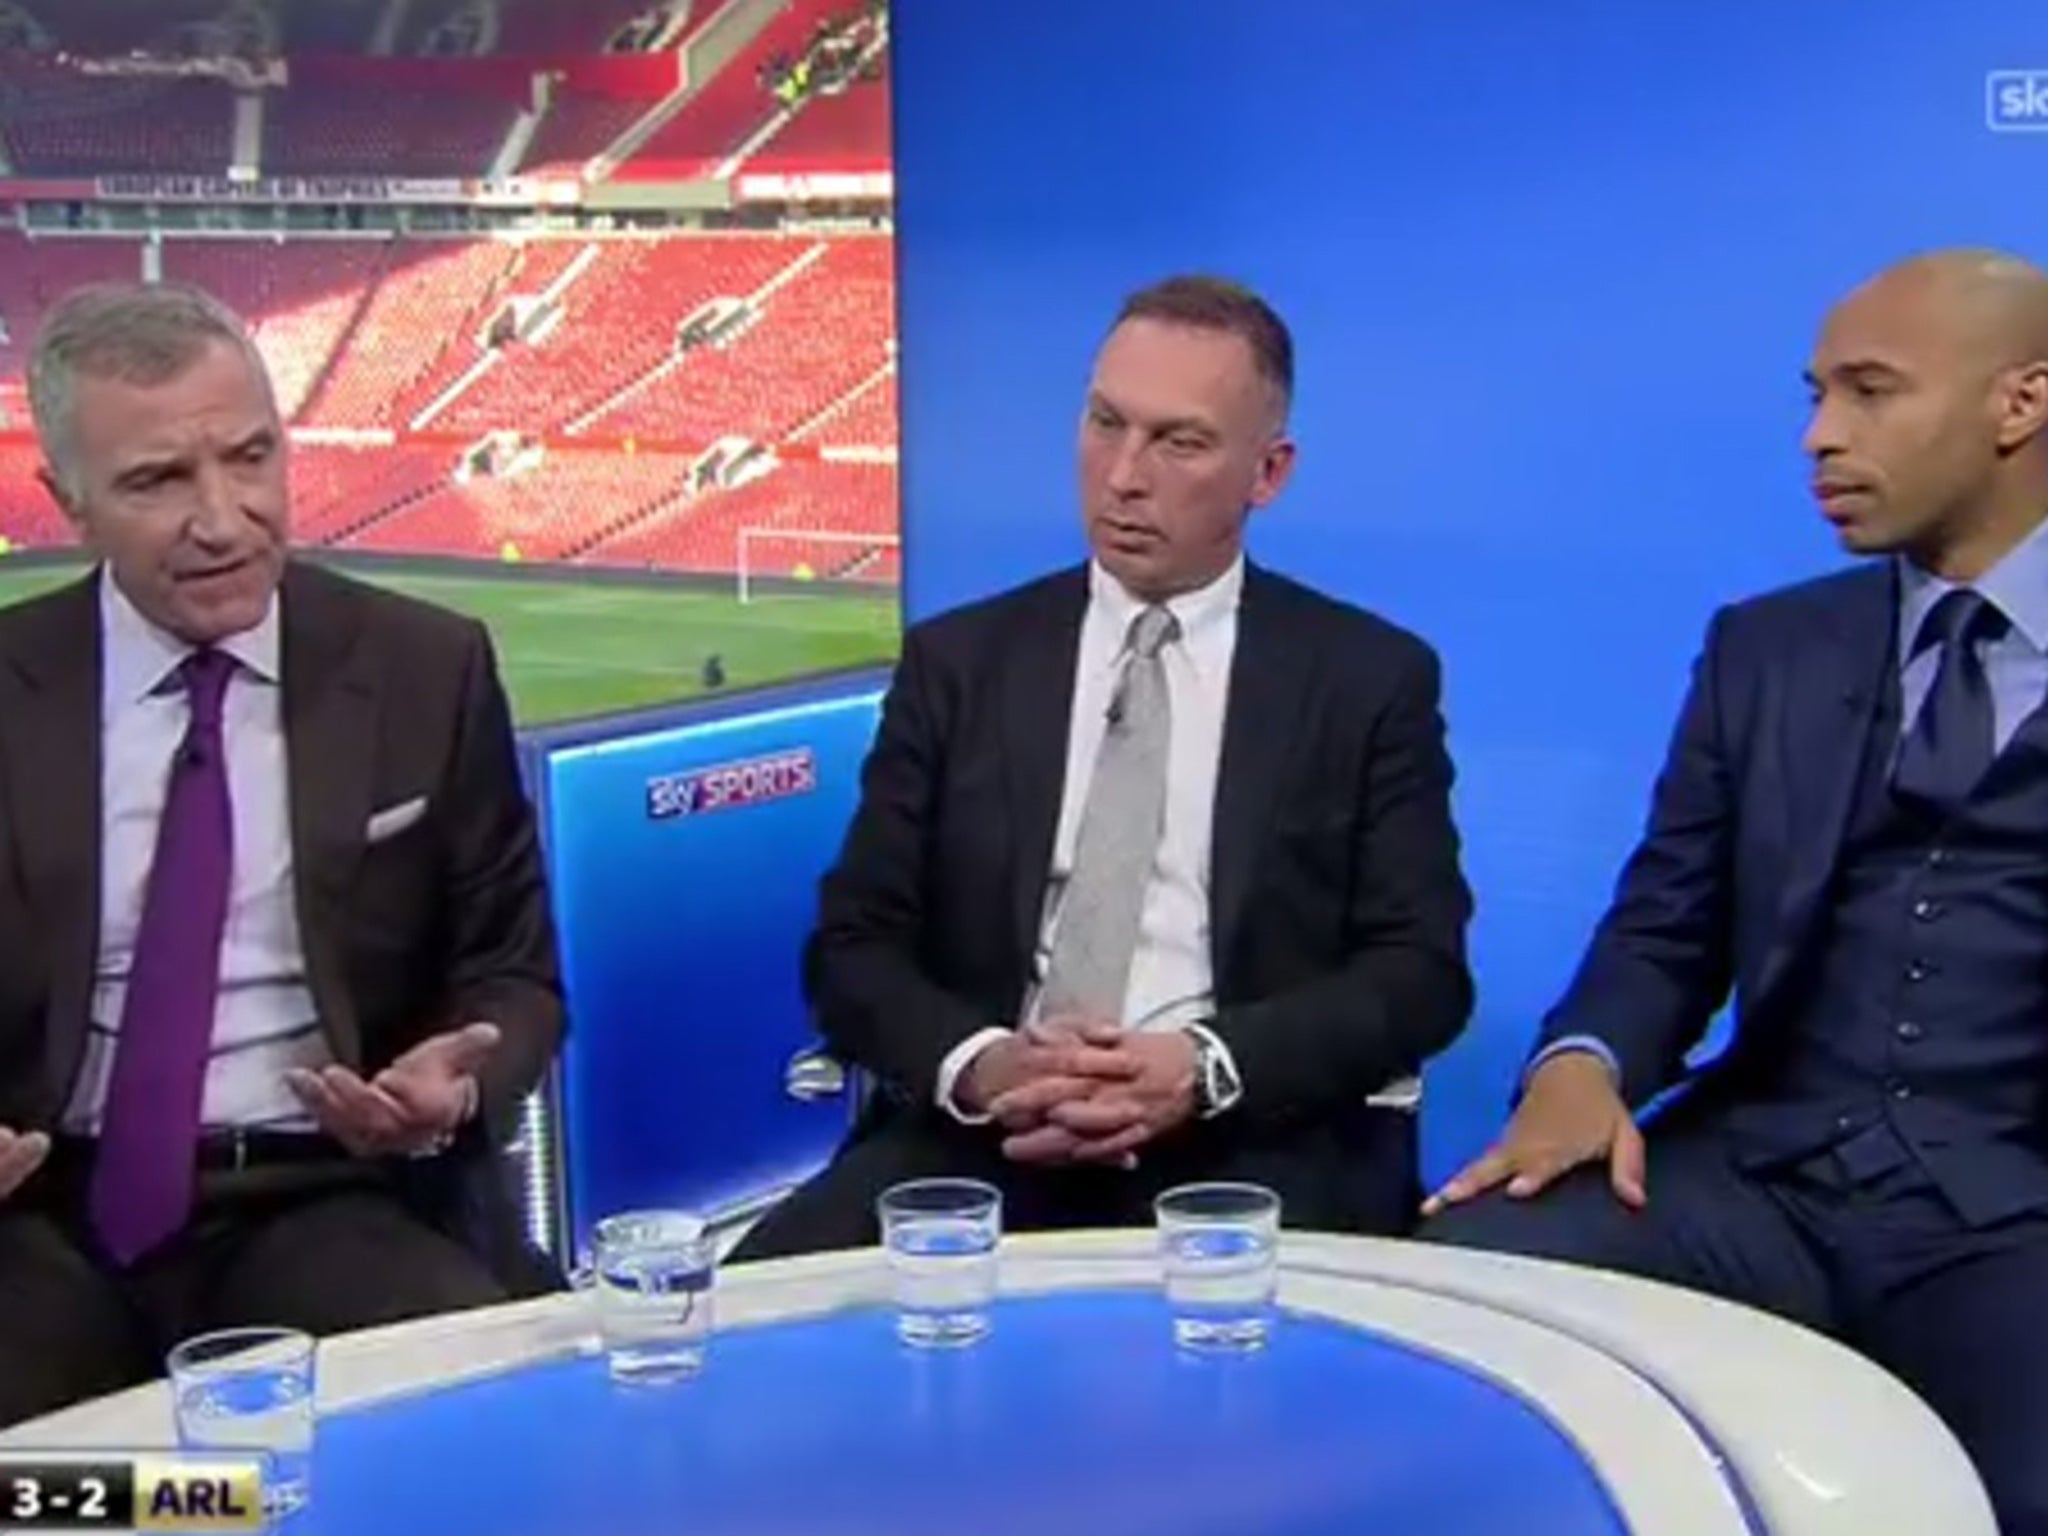 Graeme Souness (left) during punditry duty on Sky Sports alongside David Platt and Thierry Henry